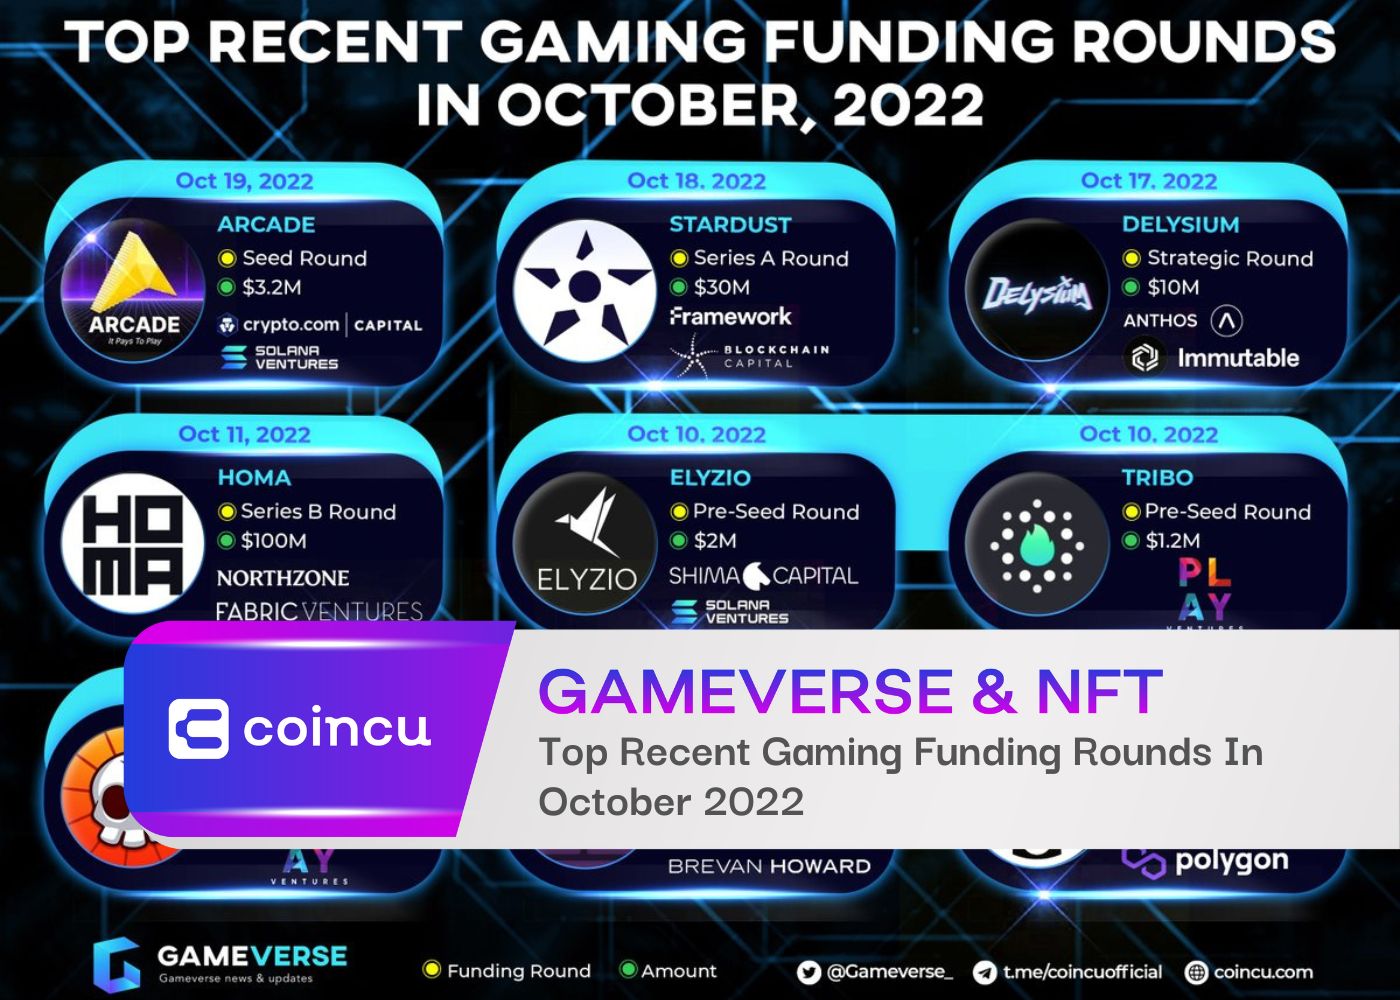 Top Recent Gaming Funding Rounds In October 2022